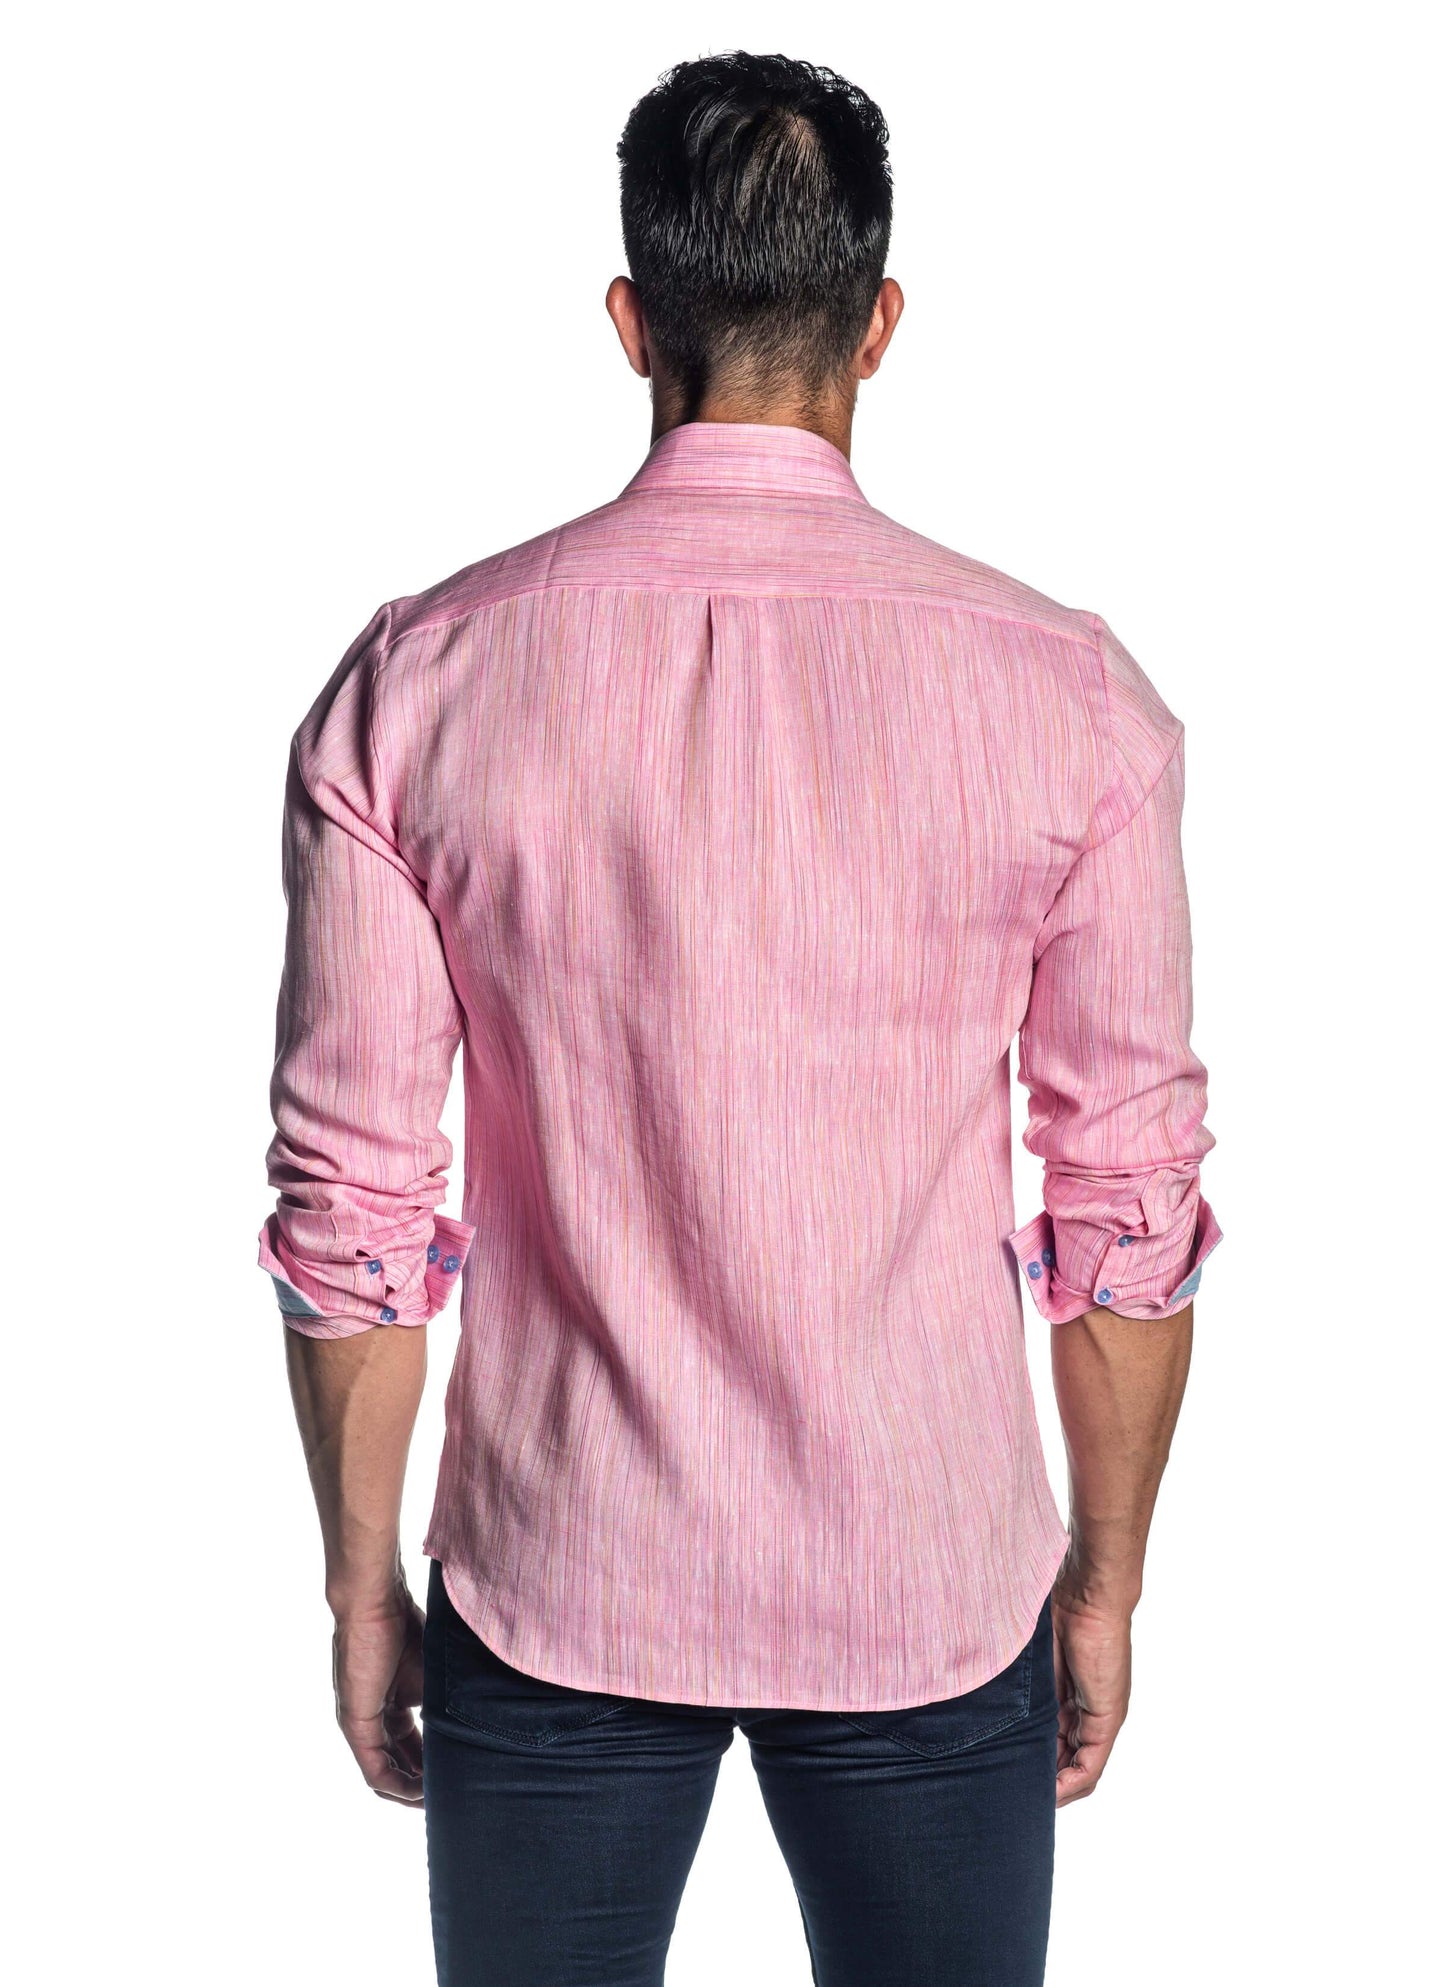 Pink Melange Shirt for Men AH-ITA-T-9014 - Back - Jared Lang